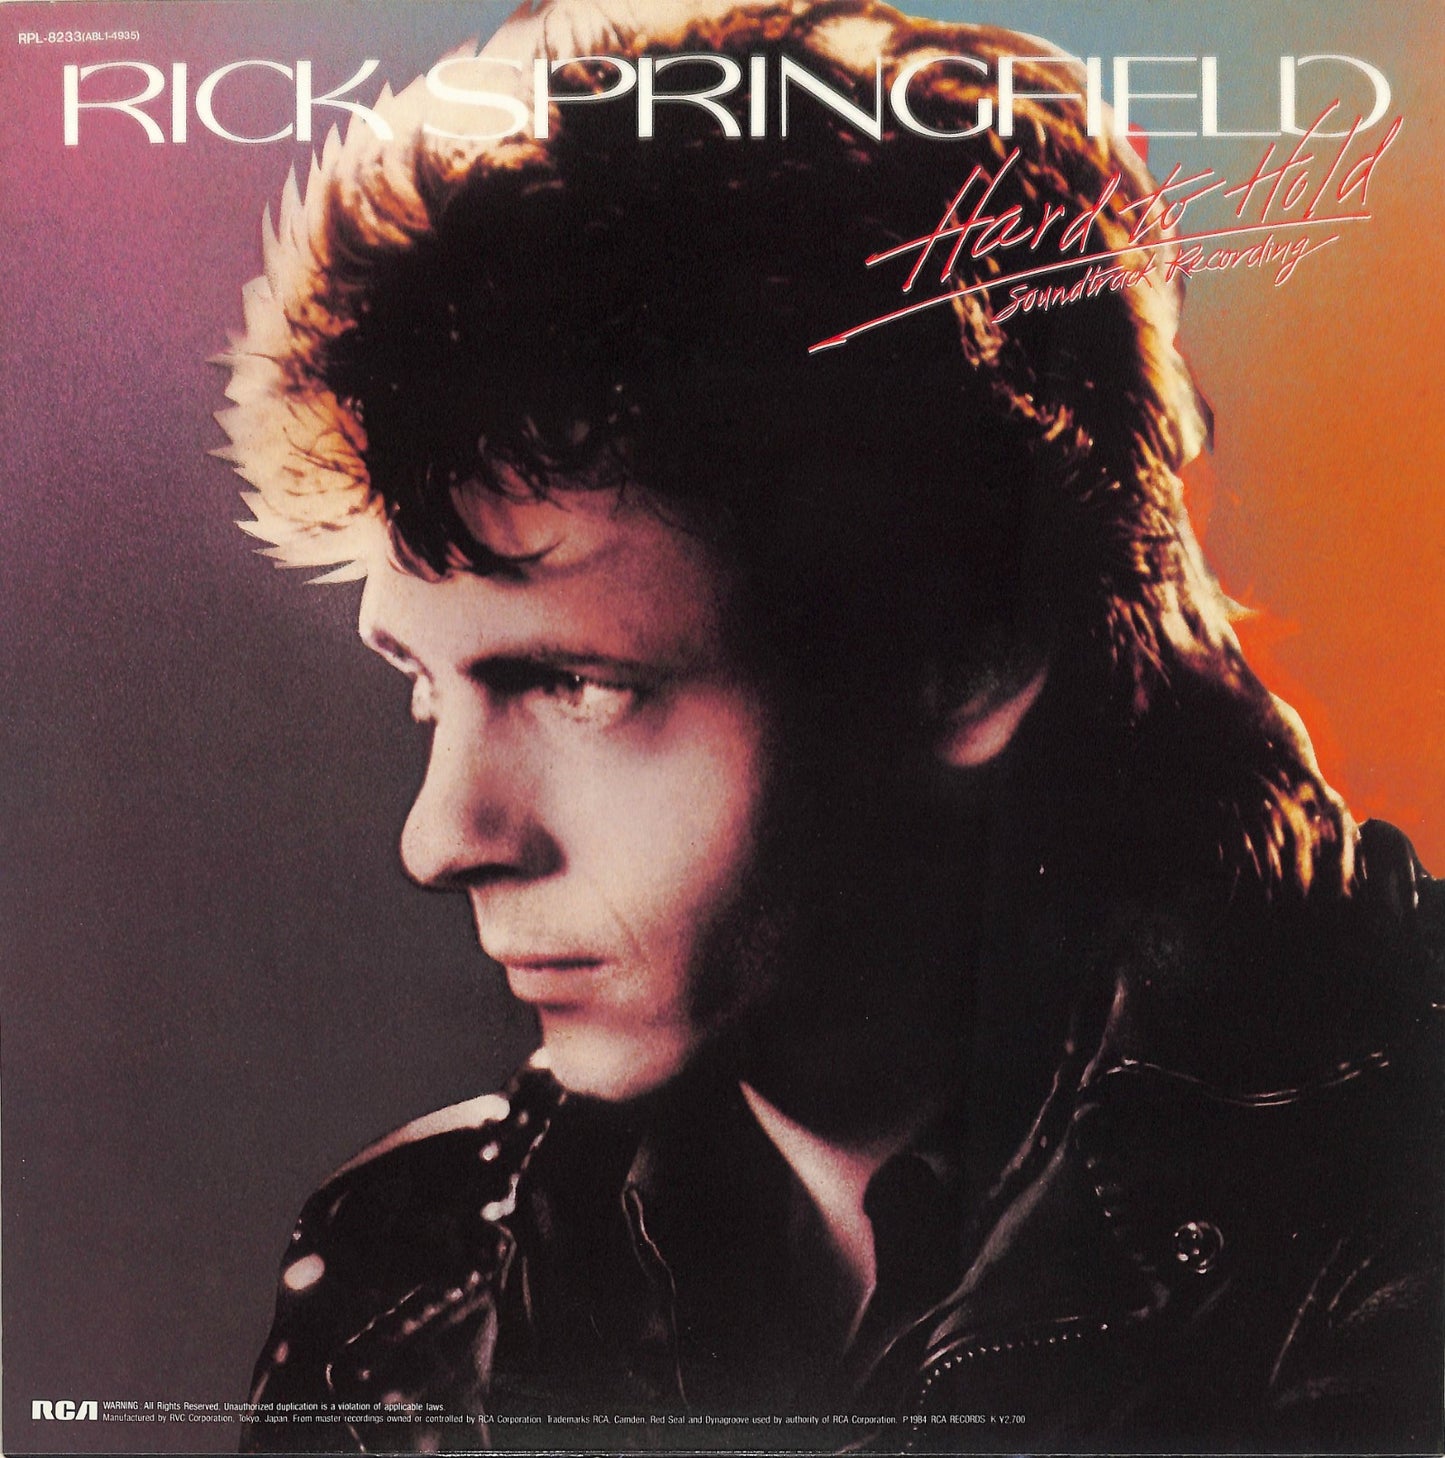 RICK SPRINGFIELD - Hard To Hold - Soundtrack Recording